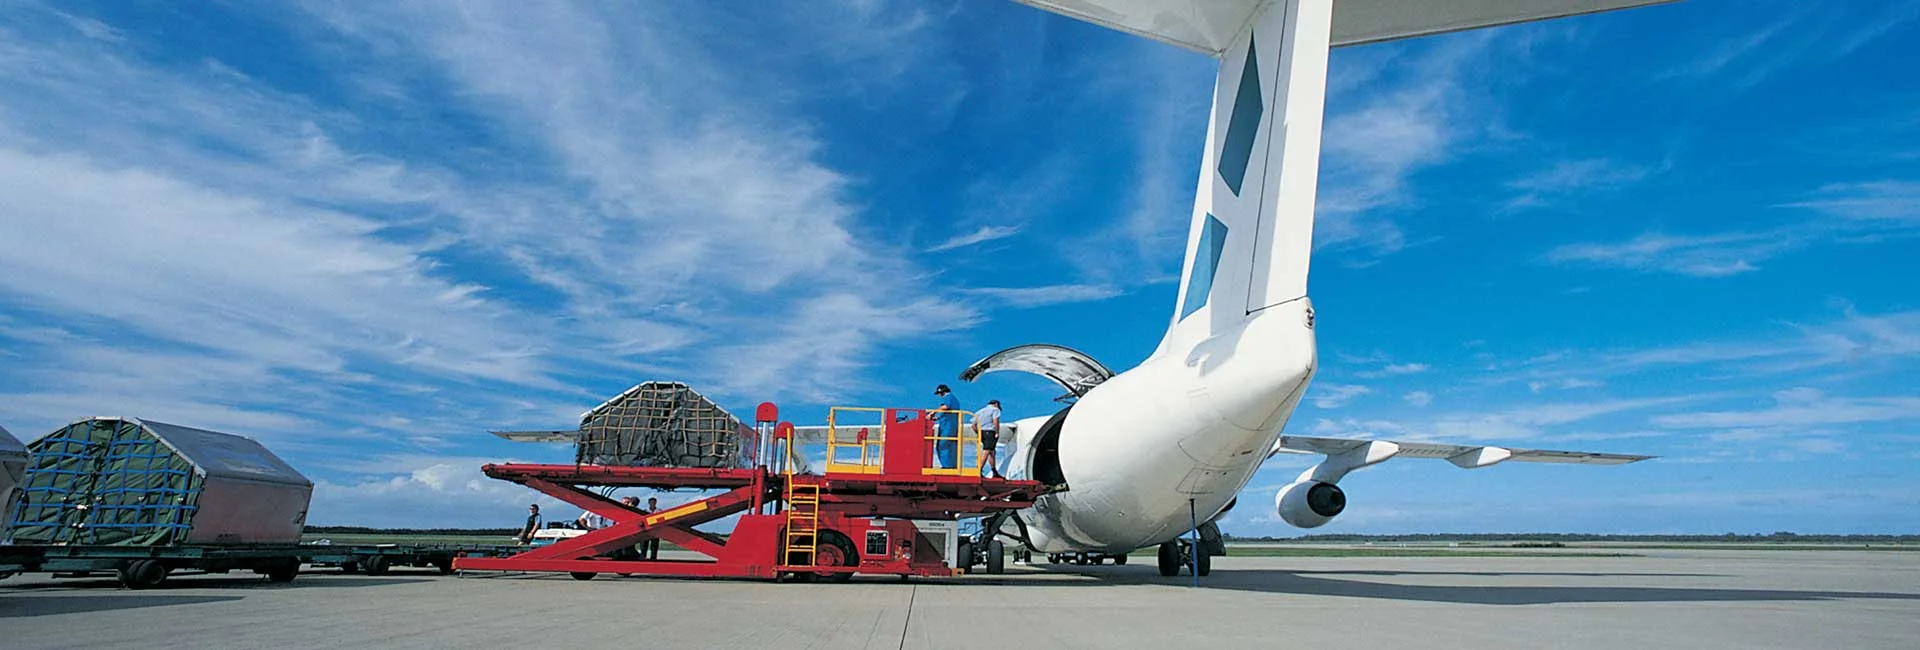 Air Freight Service Banner